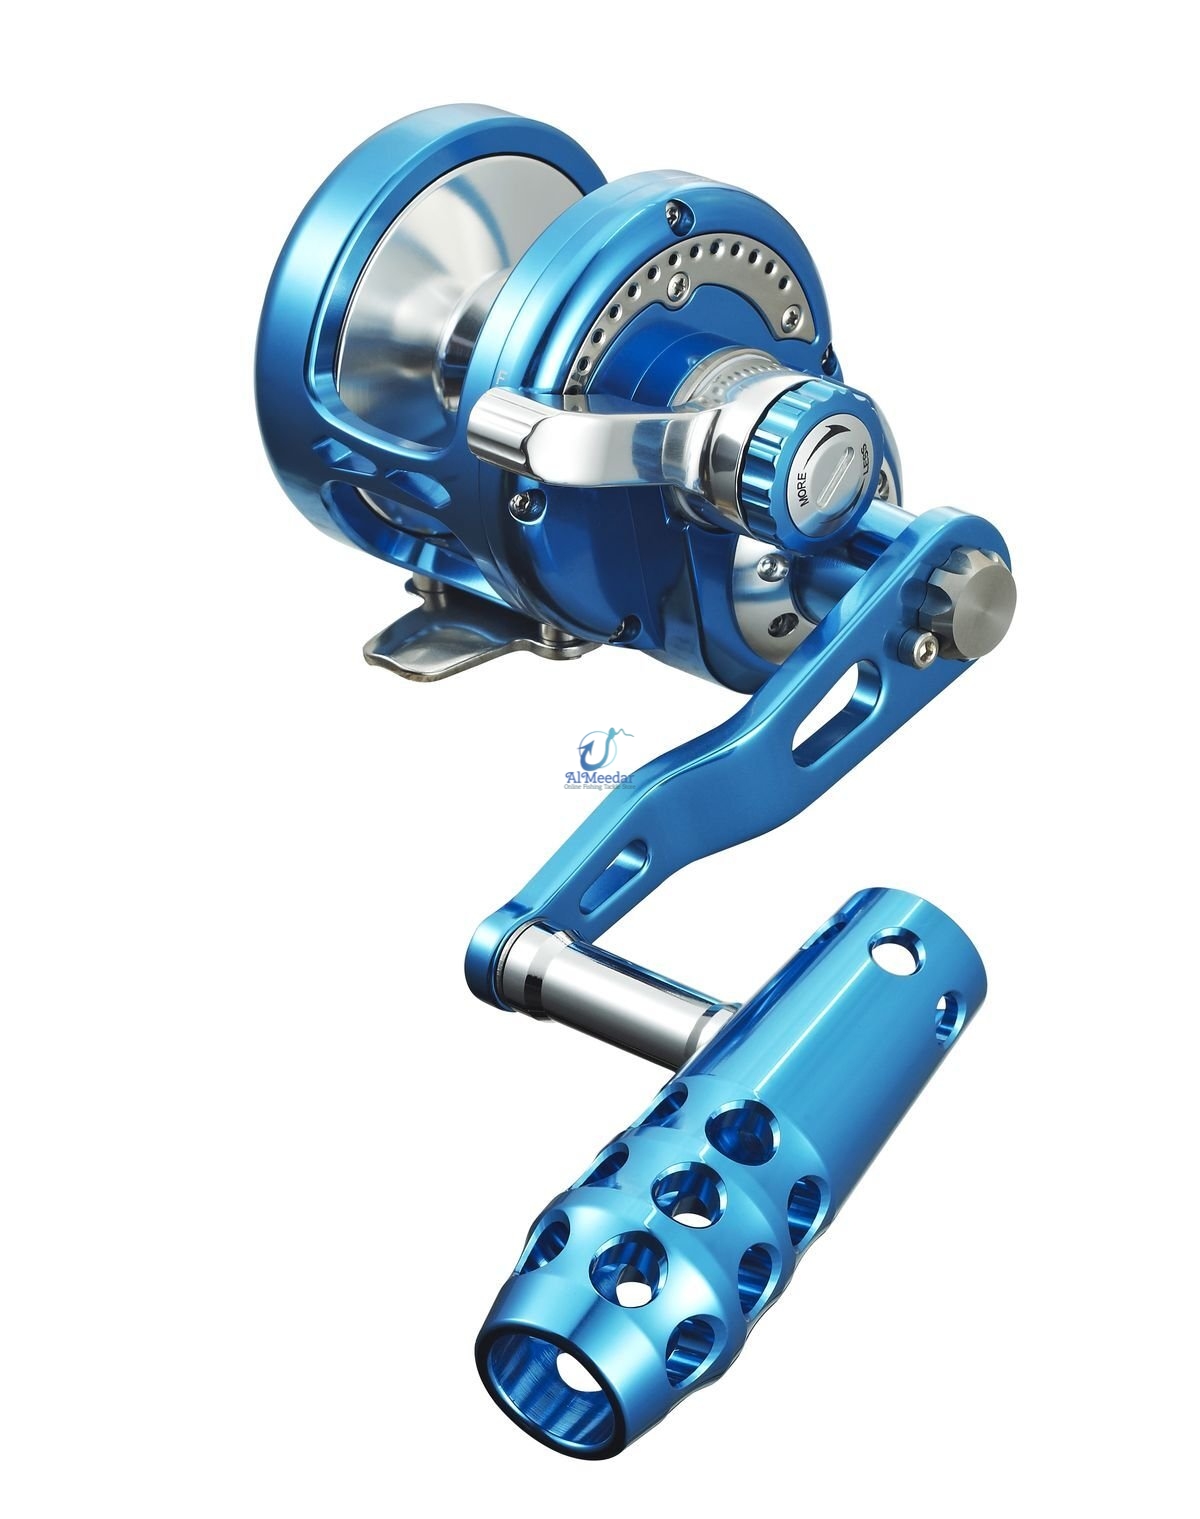 MAXEL Sealion Dual Drag Power Ratio OSL16D RH - Al Meedar Fishing  Equipment, Rods, Lures, Reels, Gear